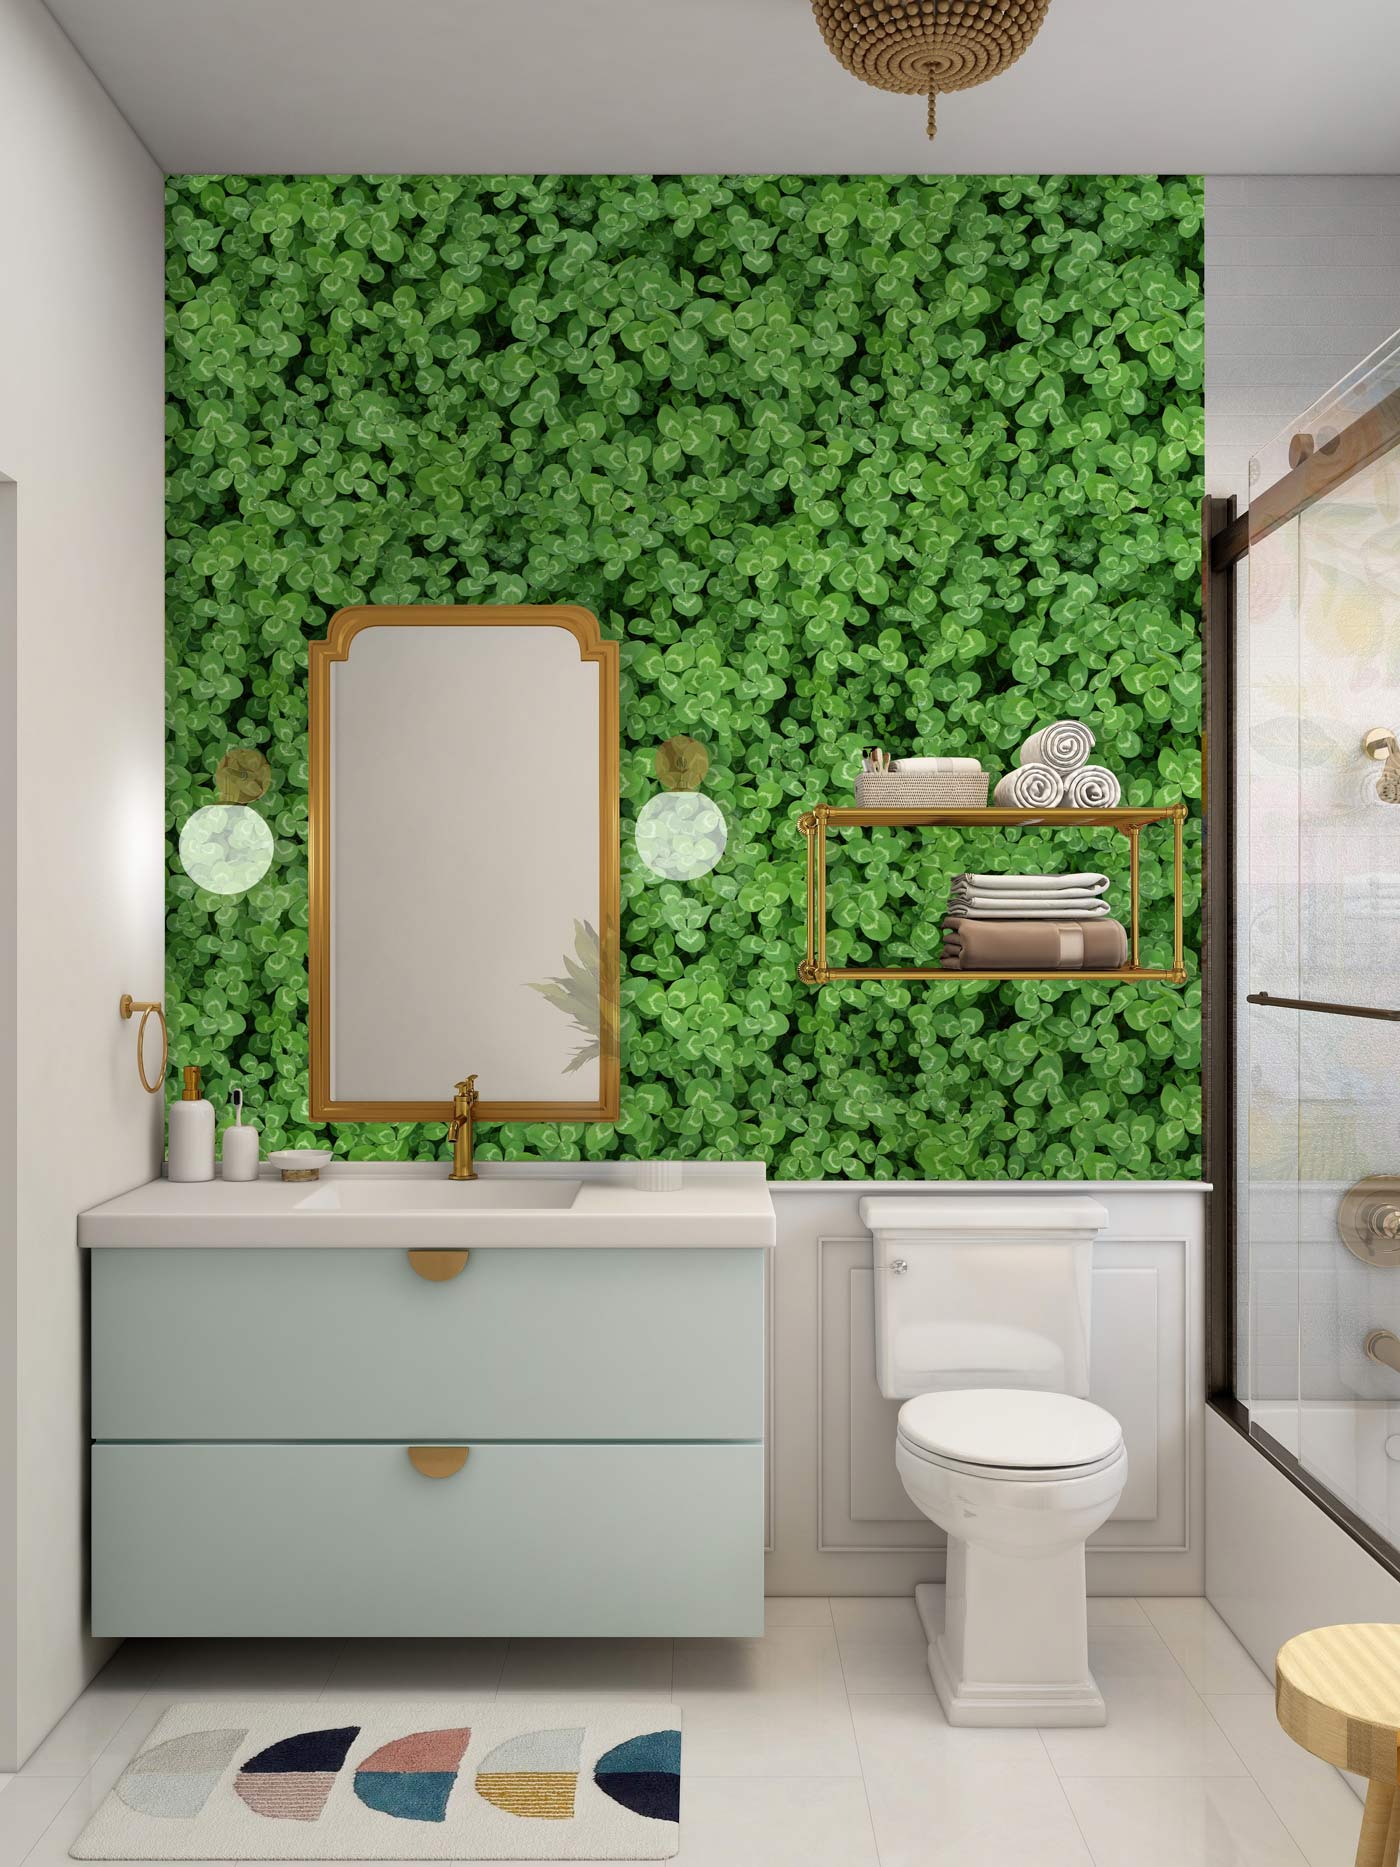 Bathroom Wallpaper Mural Featuring Clover Plants